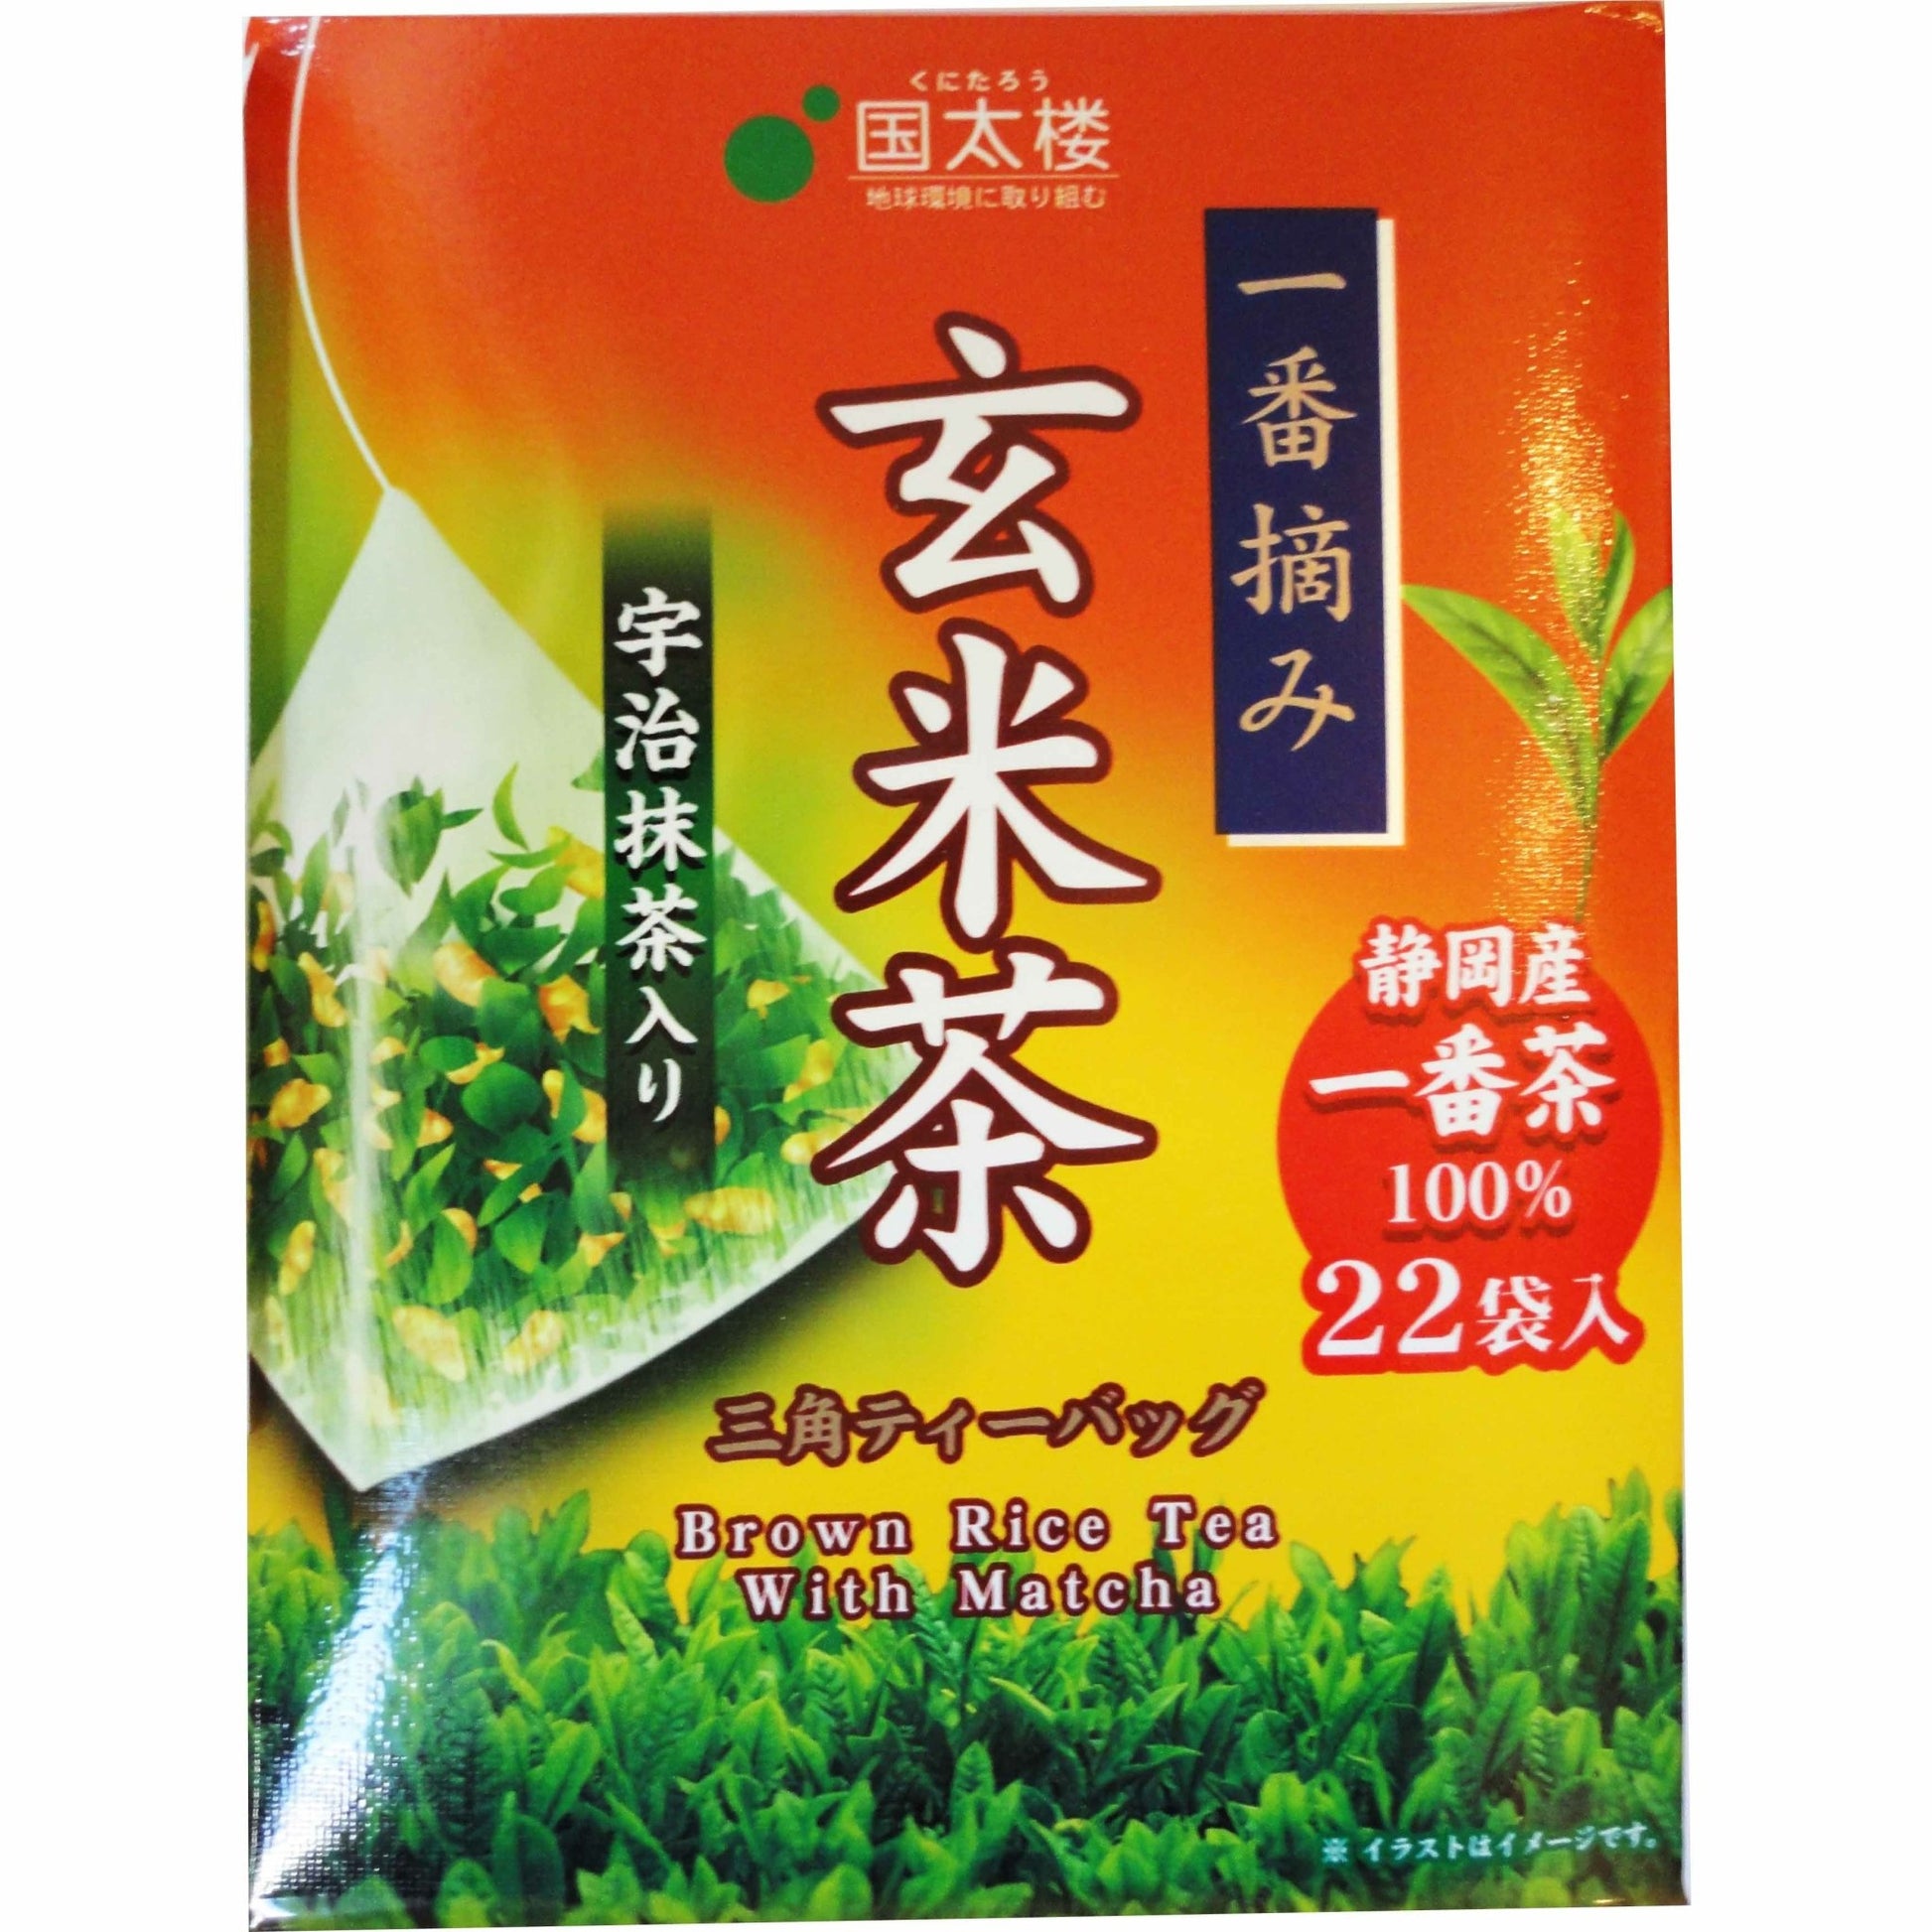 Kunitaro Ichiban-tsumi Genmaicha Brown Rice Tea with Uji Matcha 22 Tea Bags / 国太楼 一番摘み 宇治抹茶入り玄米茶 ティーバック 22袋 - RiceWineShop